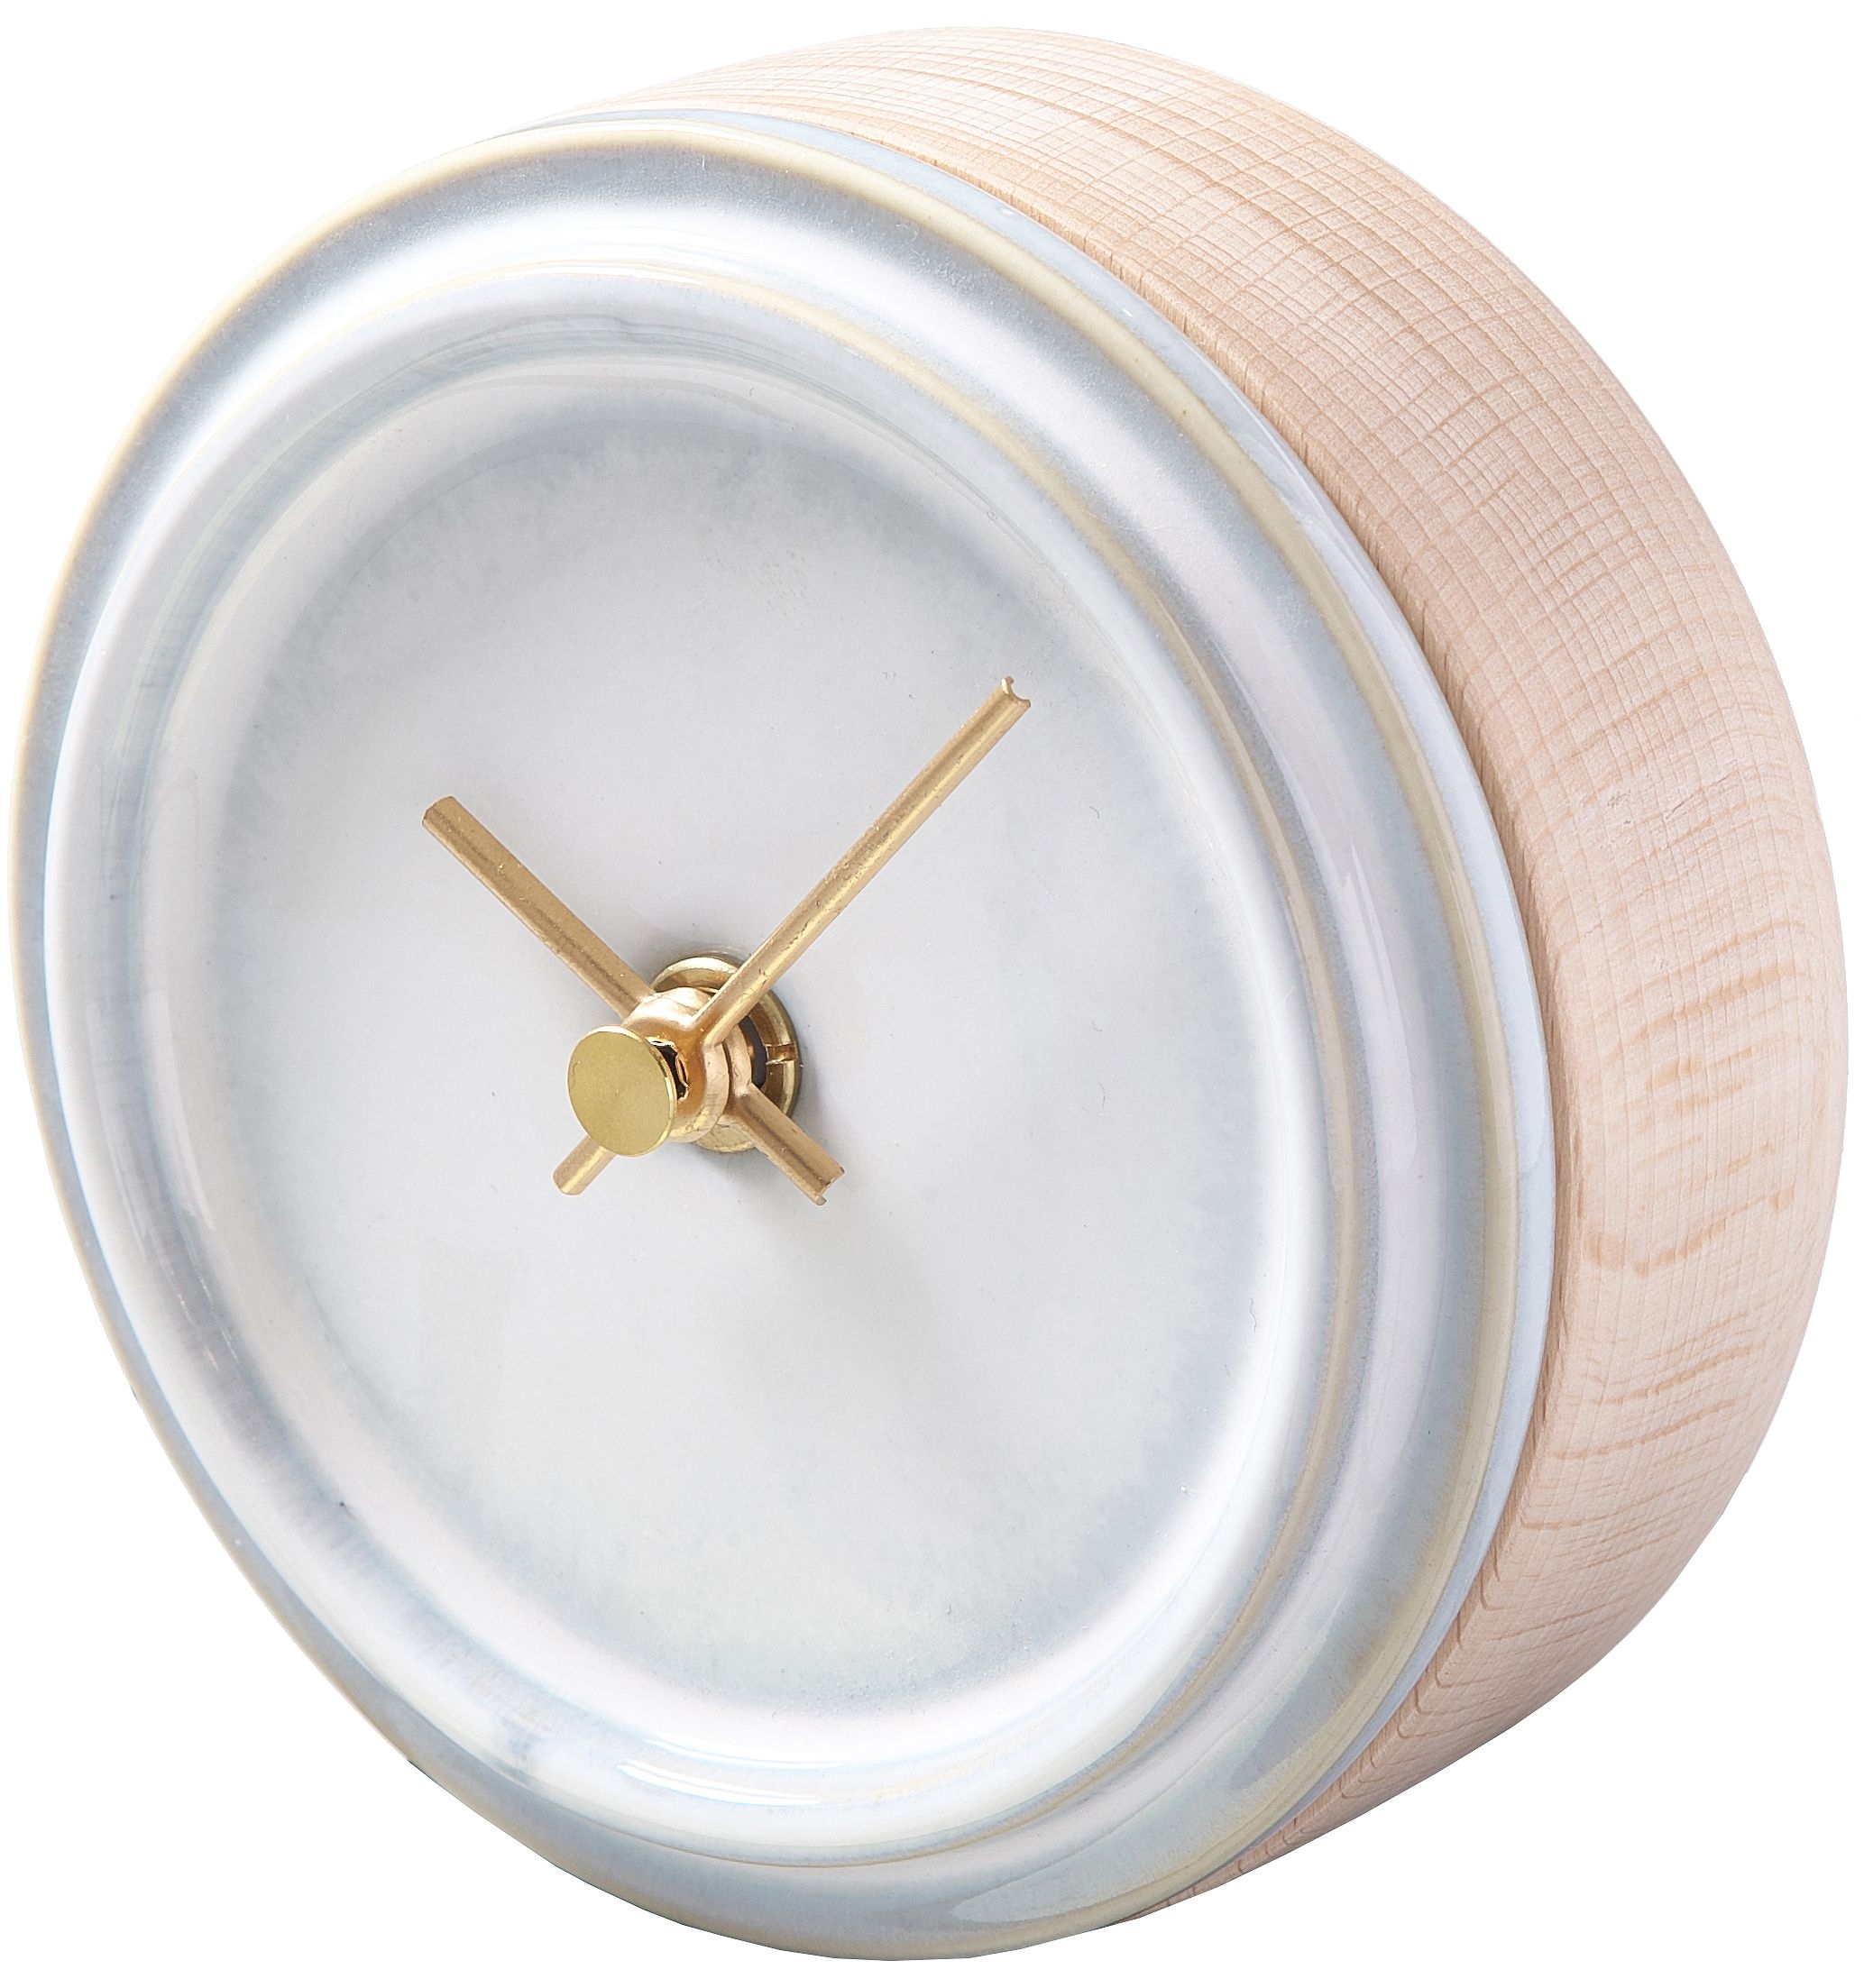 SUGY(杉浦製陶) 陶磁器の美しい置き時計 TILE WOOD CLOCK 乳白釉